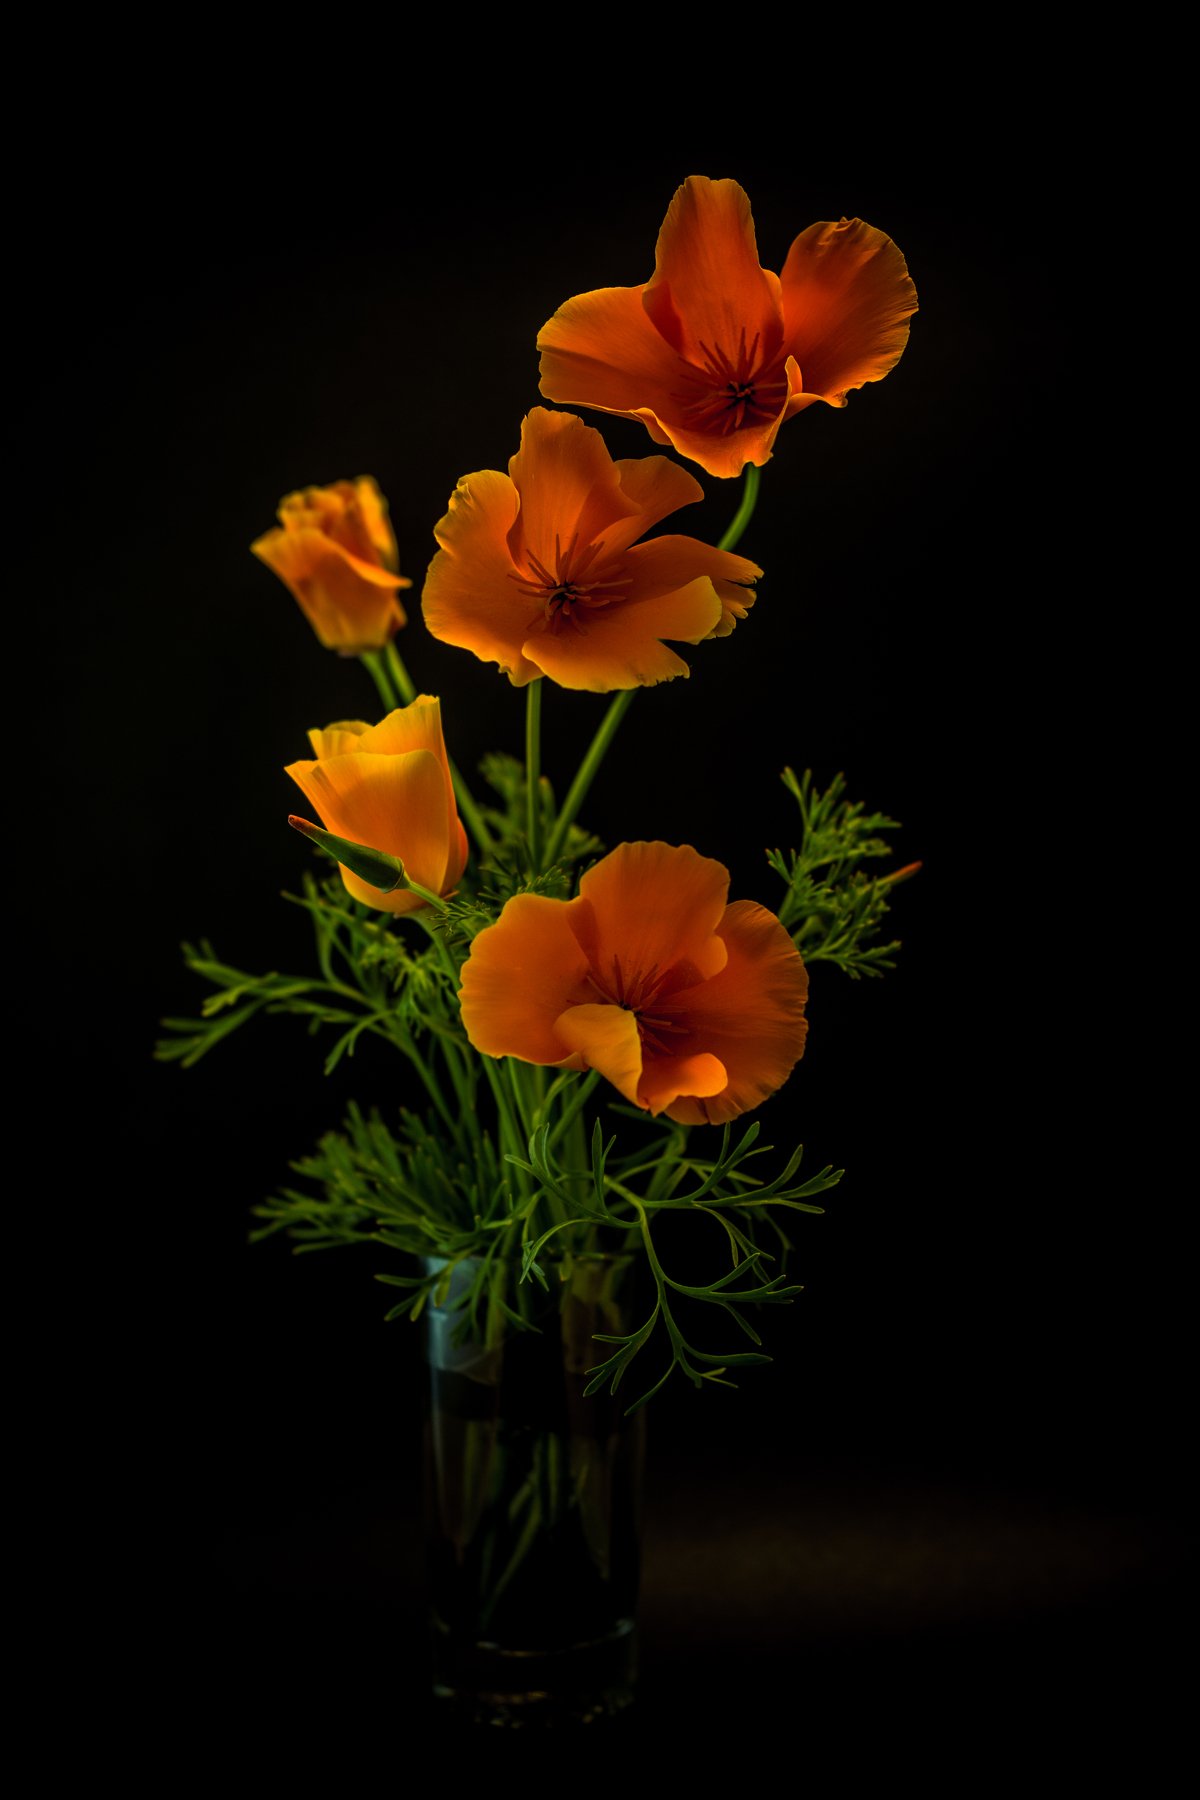 fragile, still life, interior, flowers, poppies, orange, green, background, Antonio Coelho